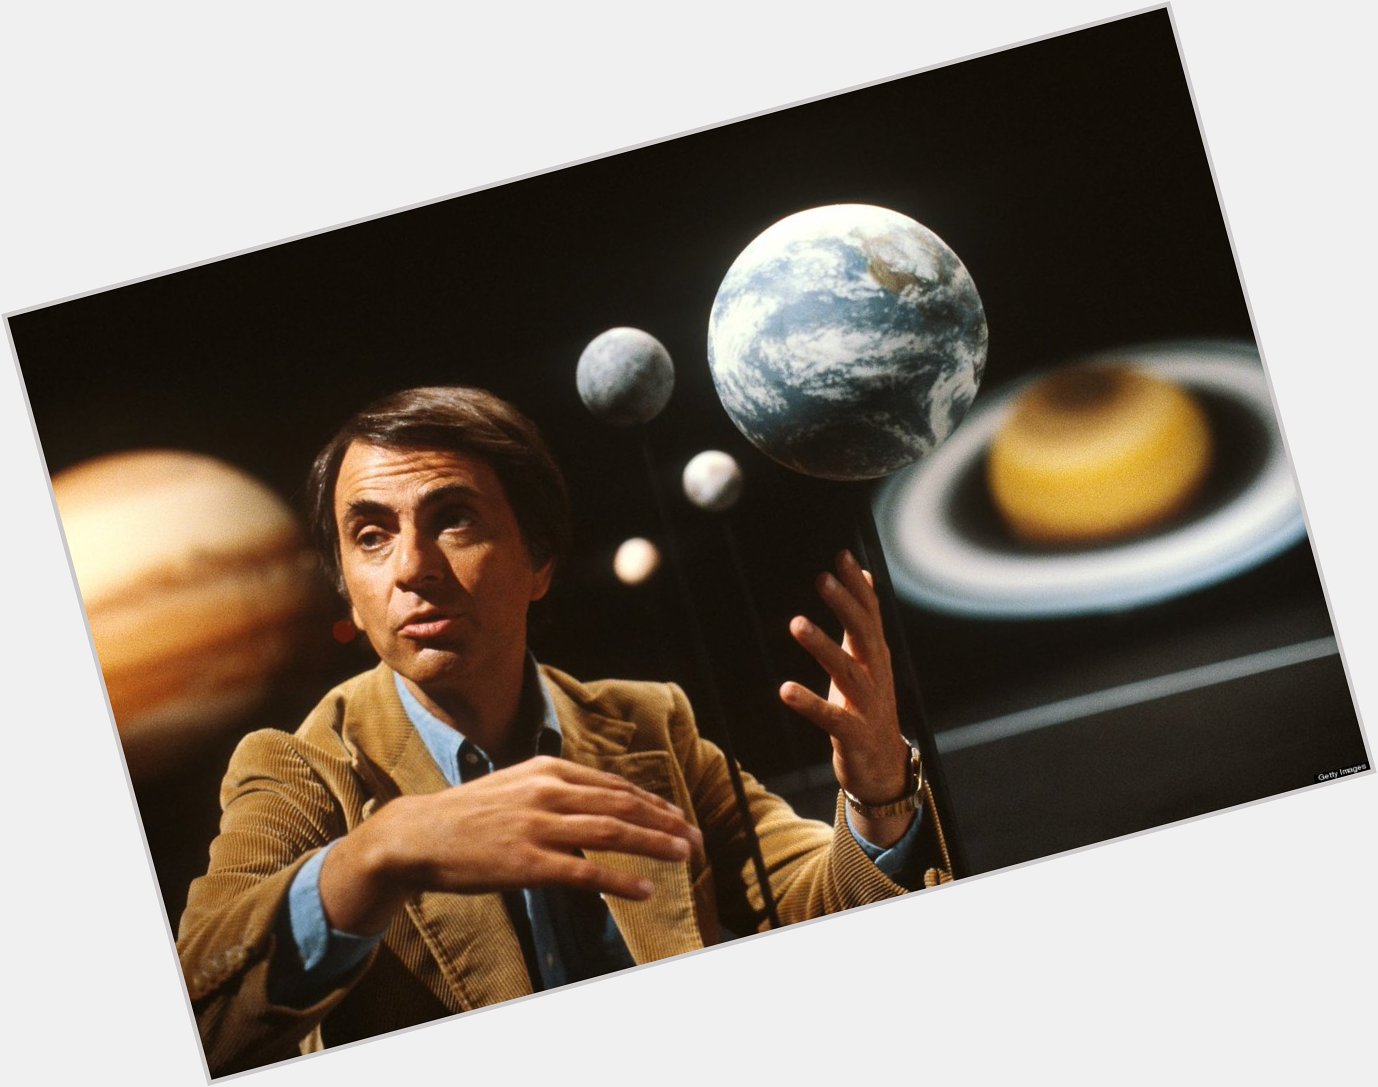 Happy Birthday to my hero and my bday buddy, Carl Sagan. 